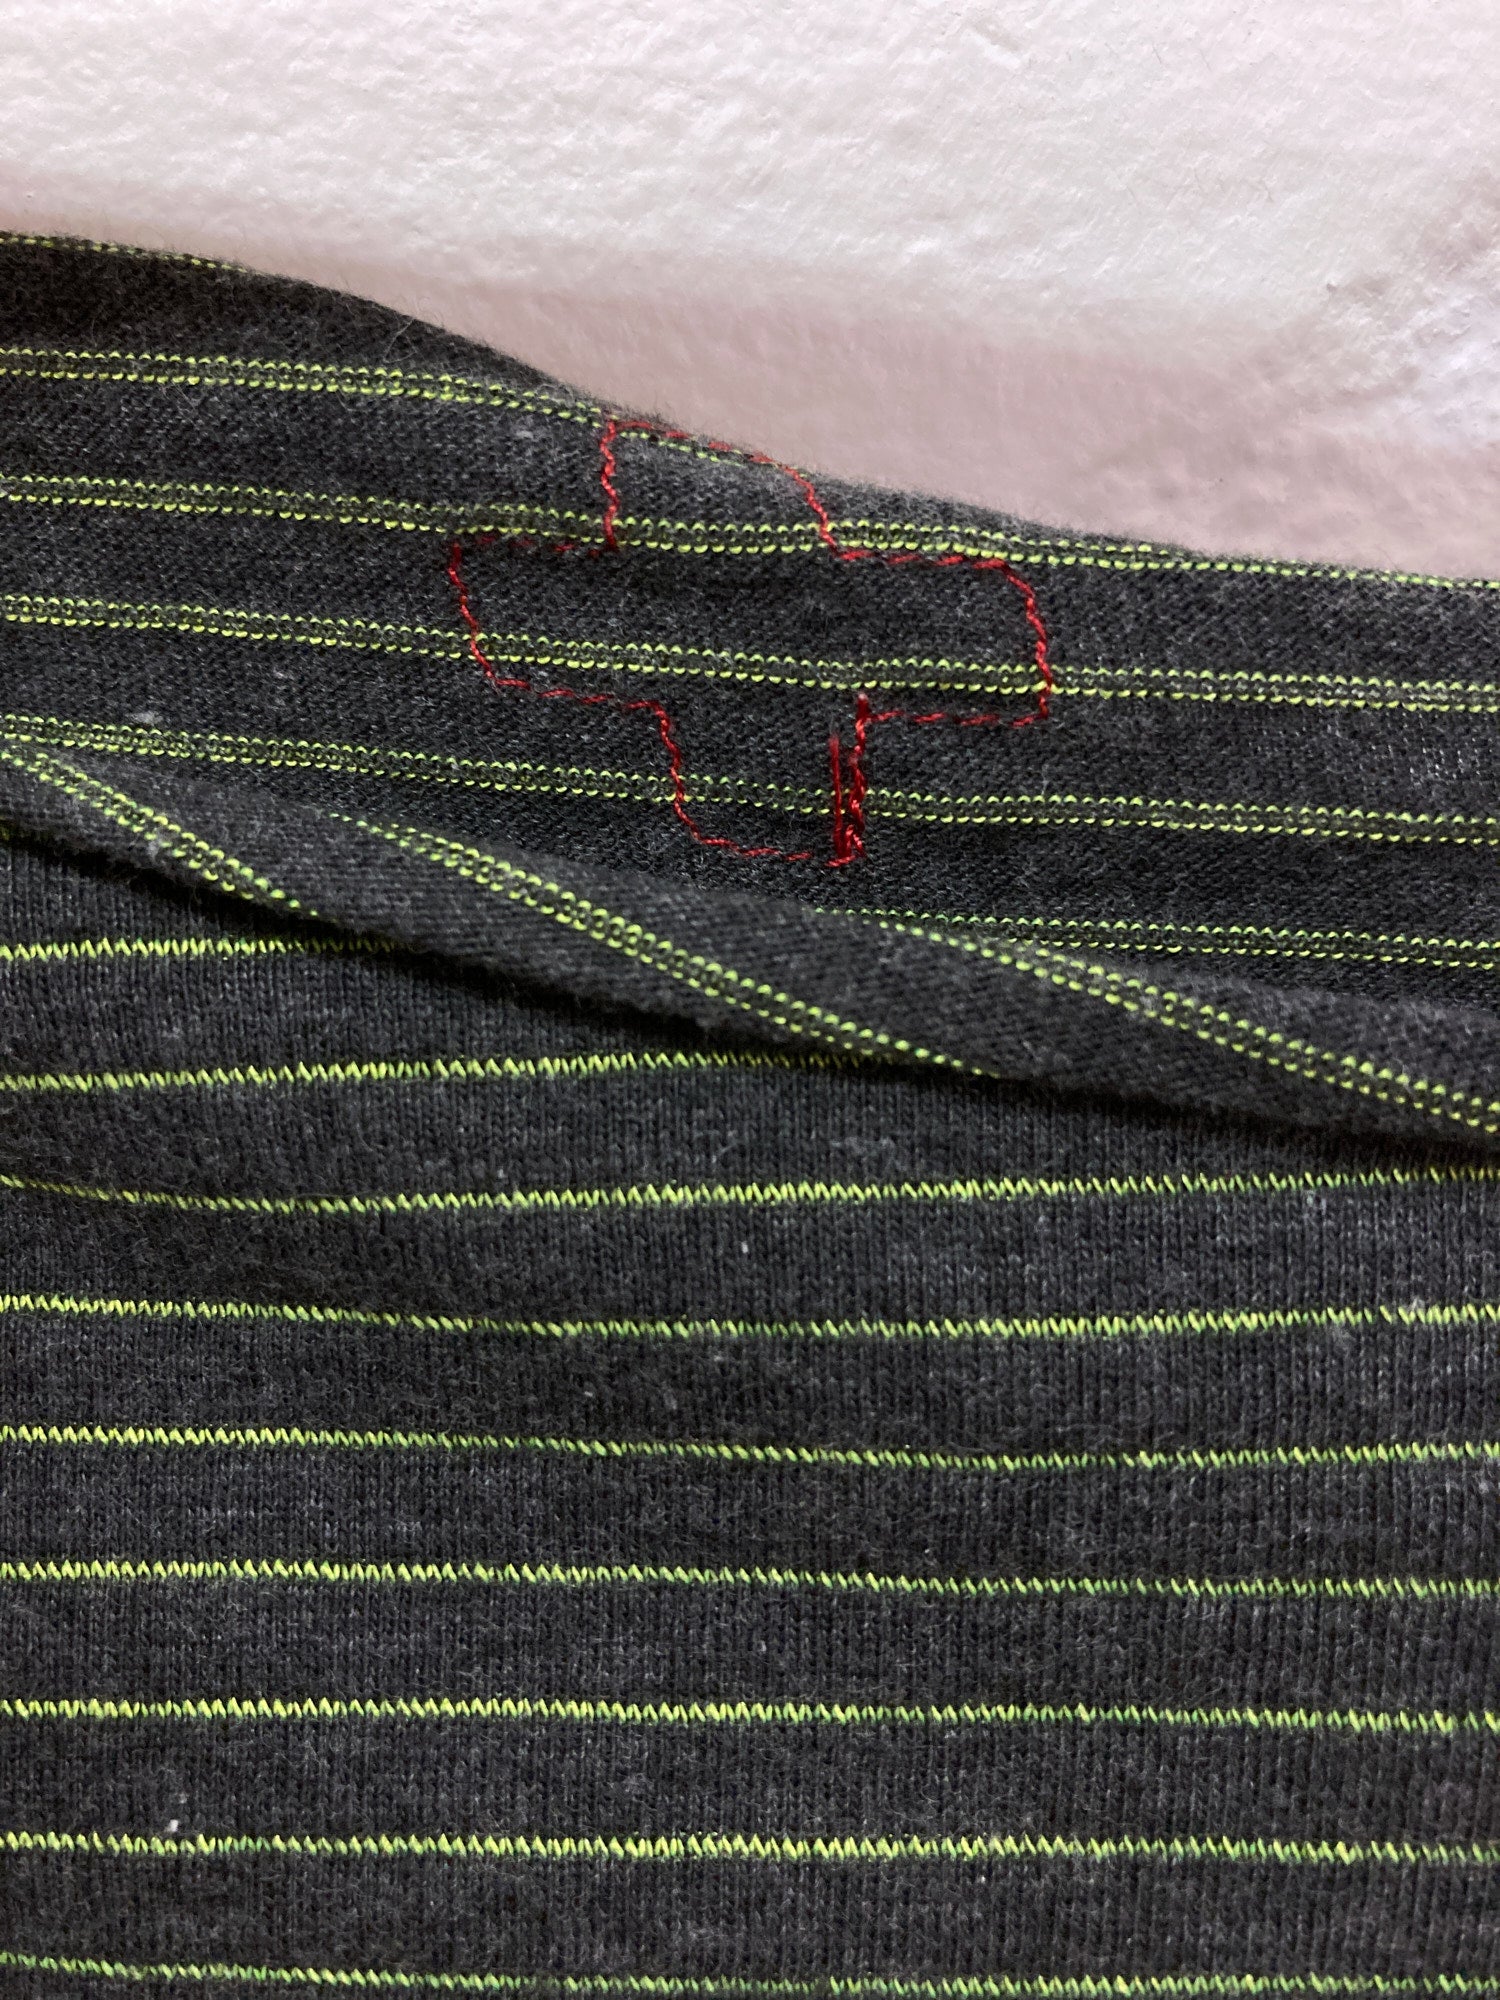 A.F. Vandevorst green cotton stripe overlock detail wide neck t-shirt  - XS S